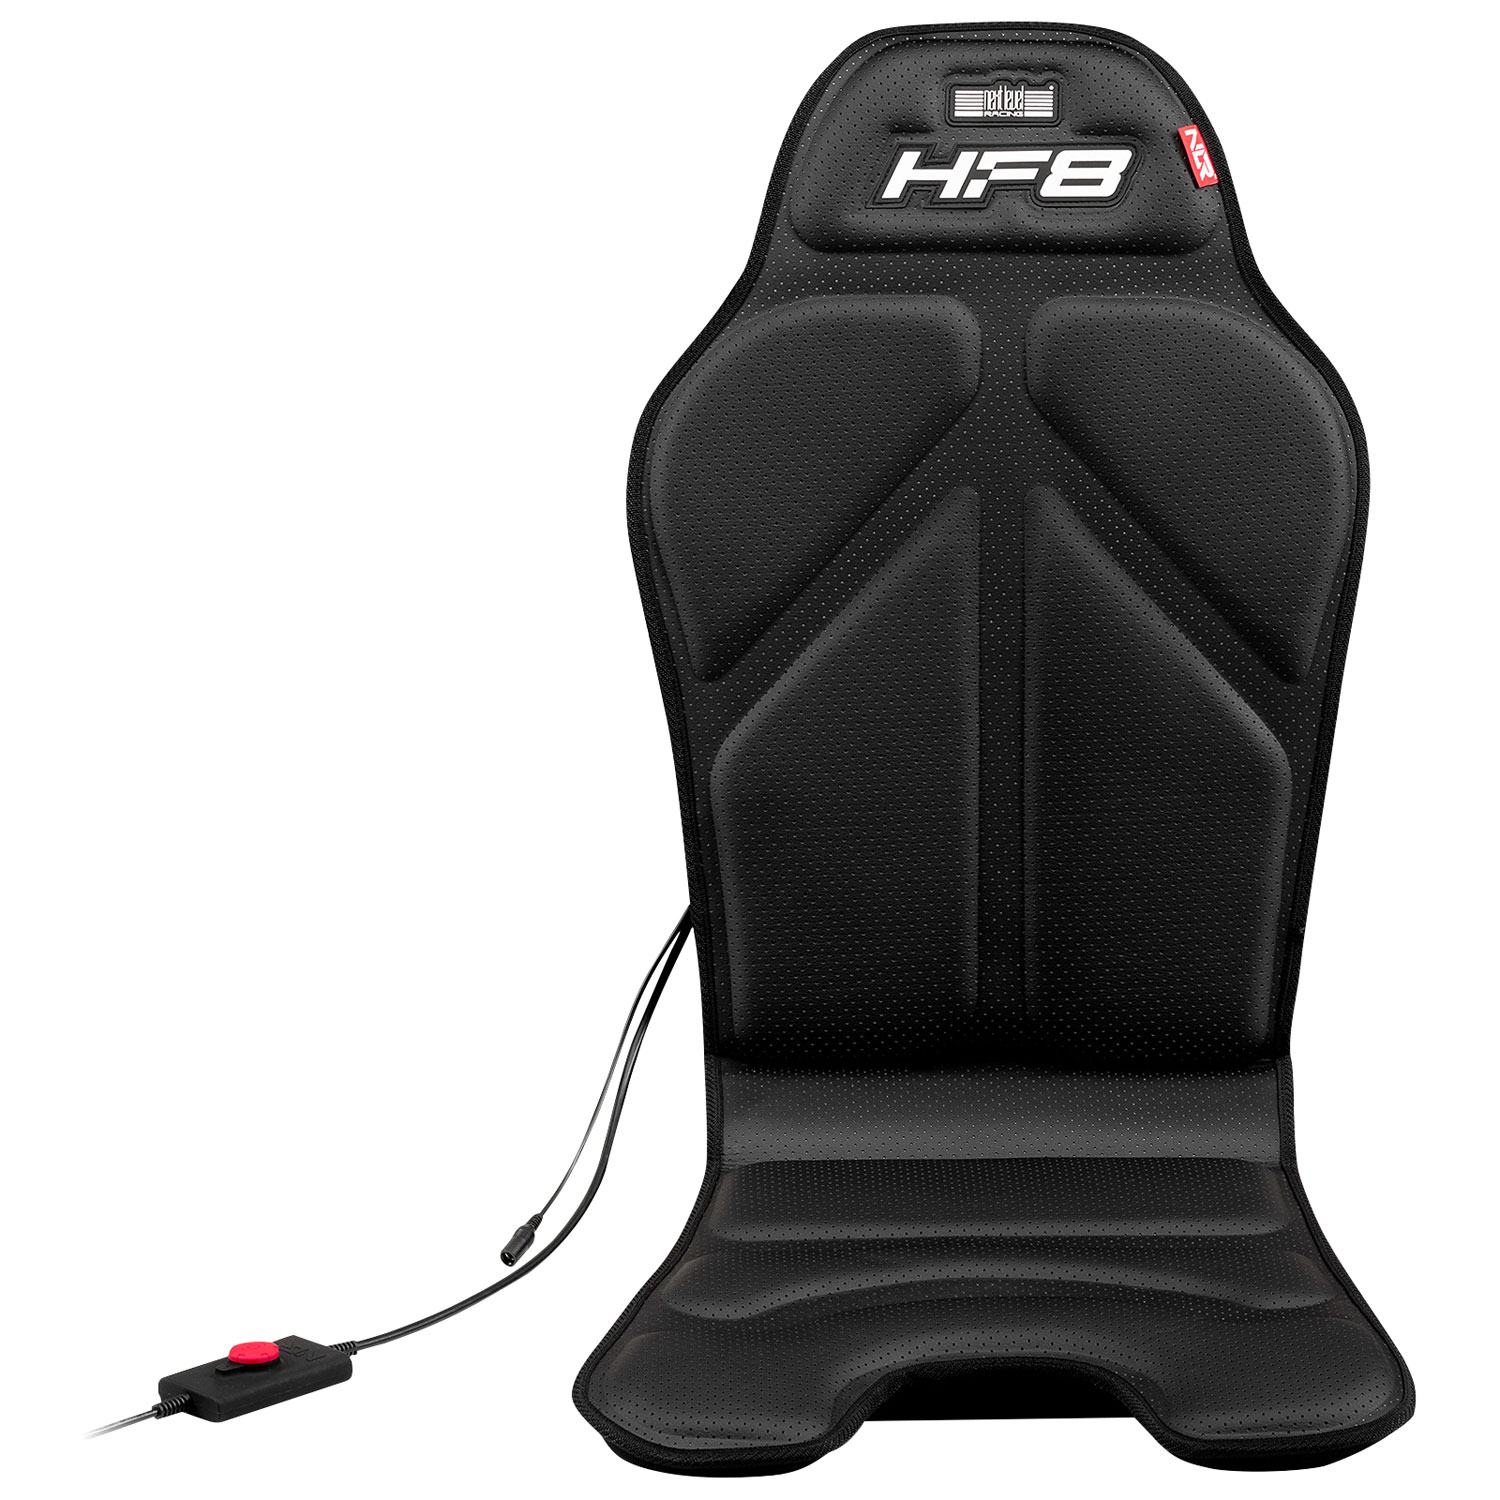 UNI Next Level Racing HF8 Haptic Feedback Gaming Pad